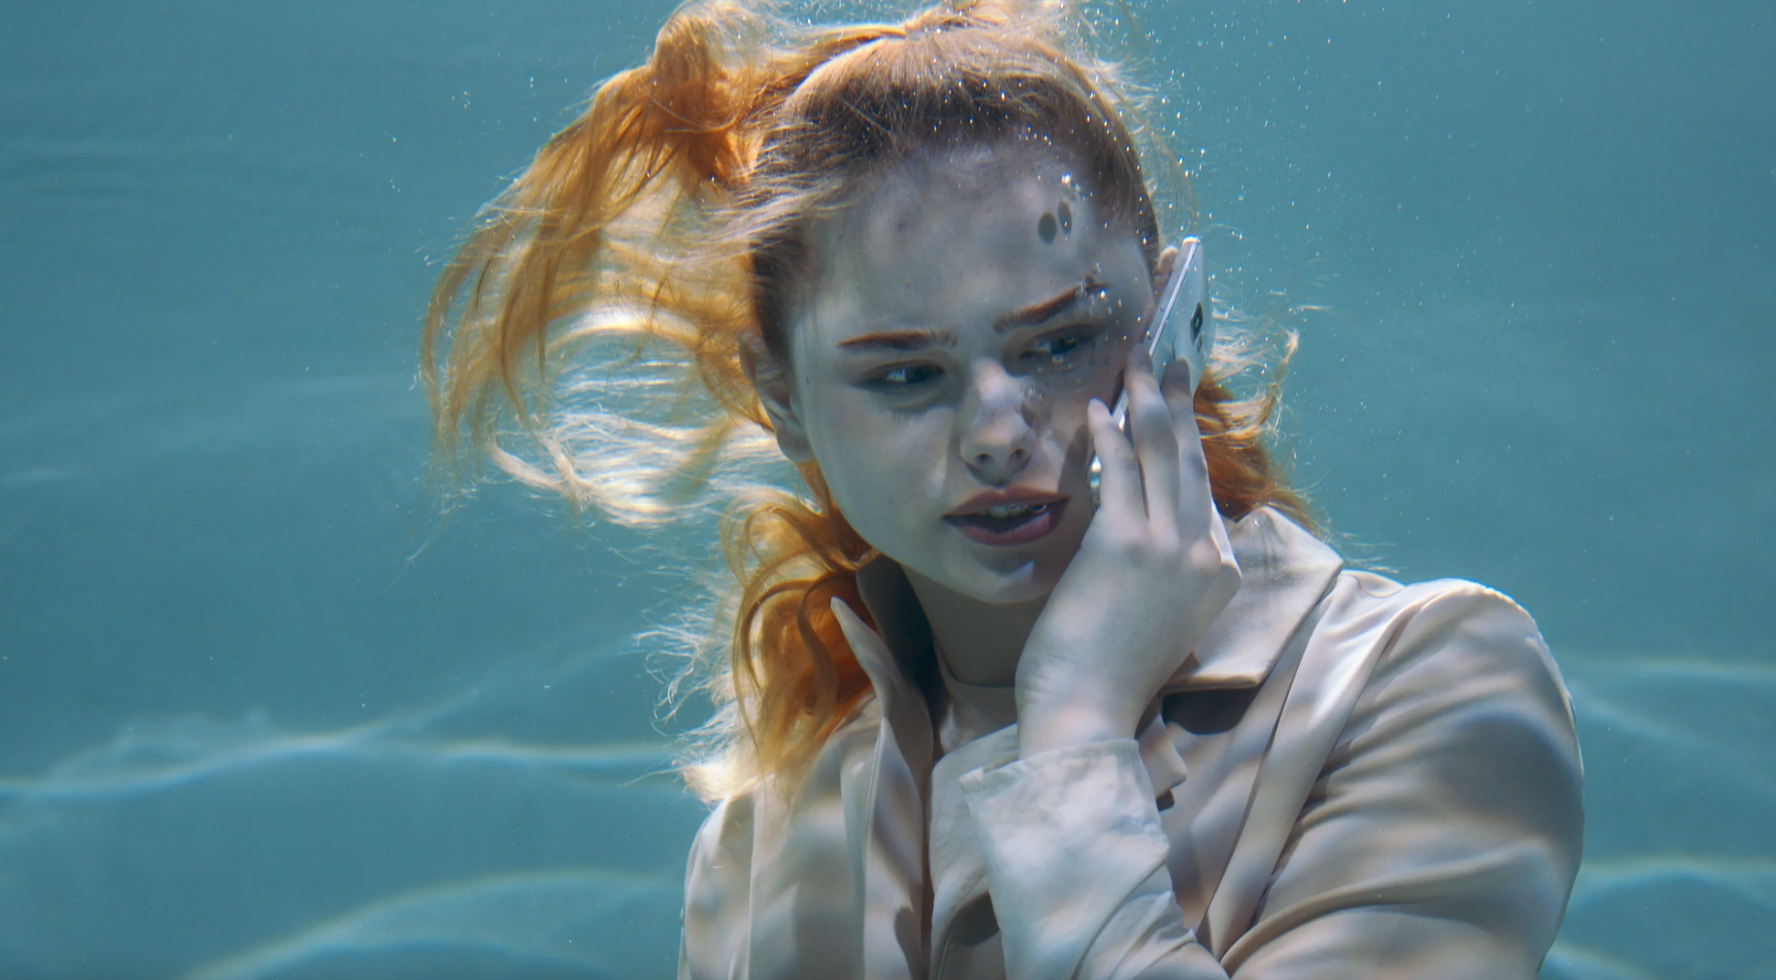 Girl talking underwater